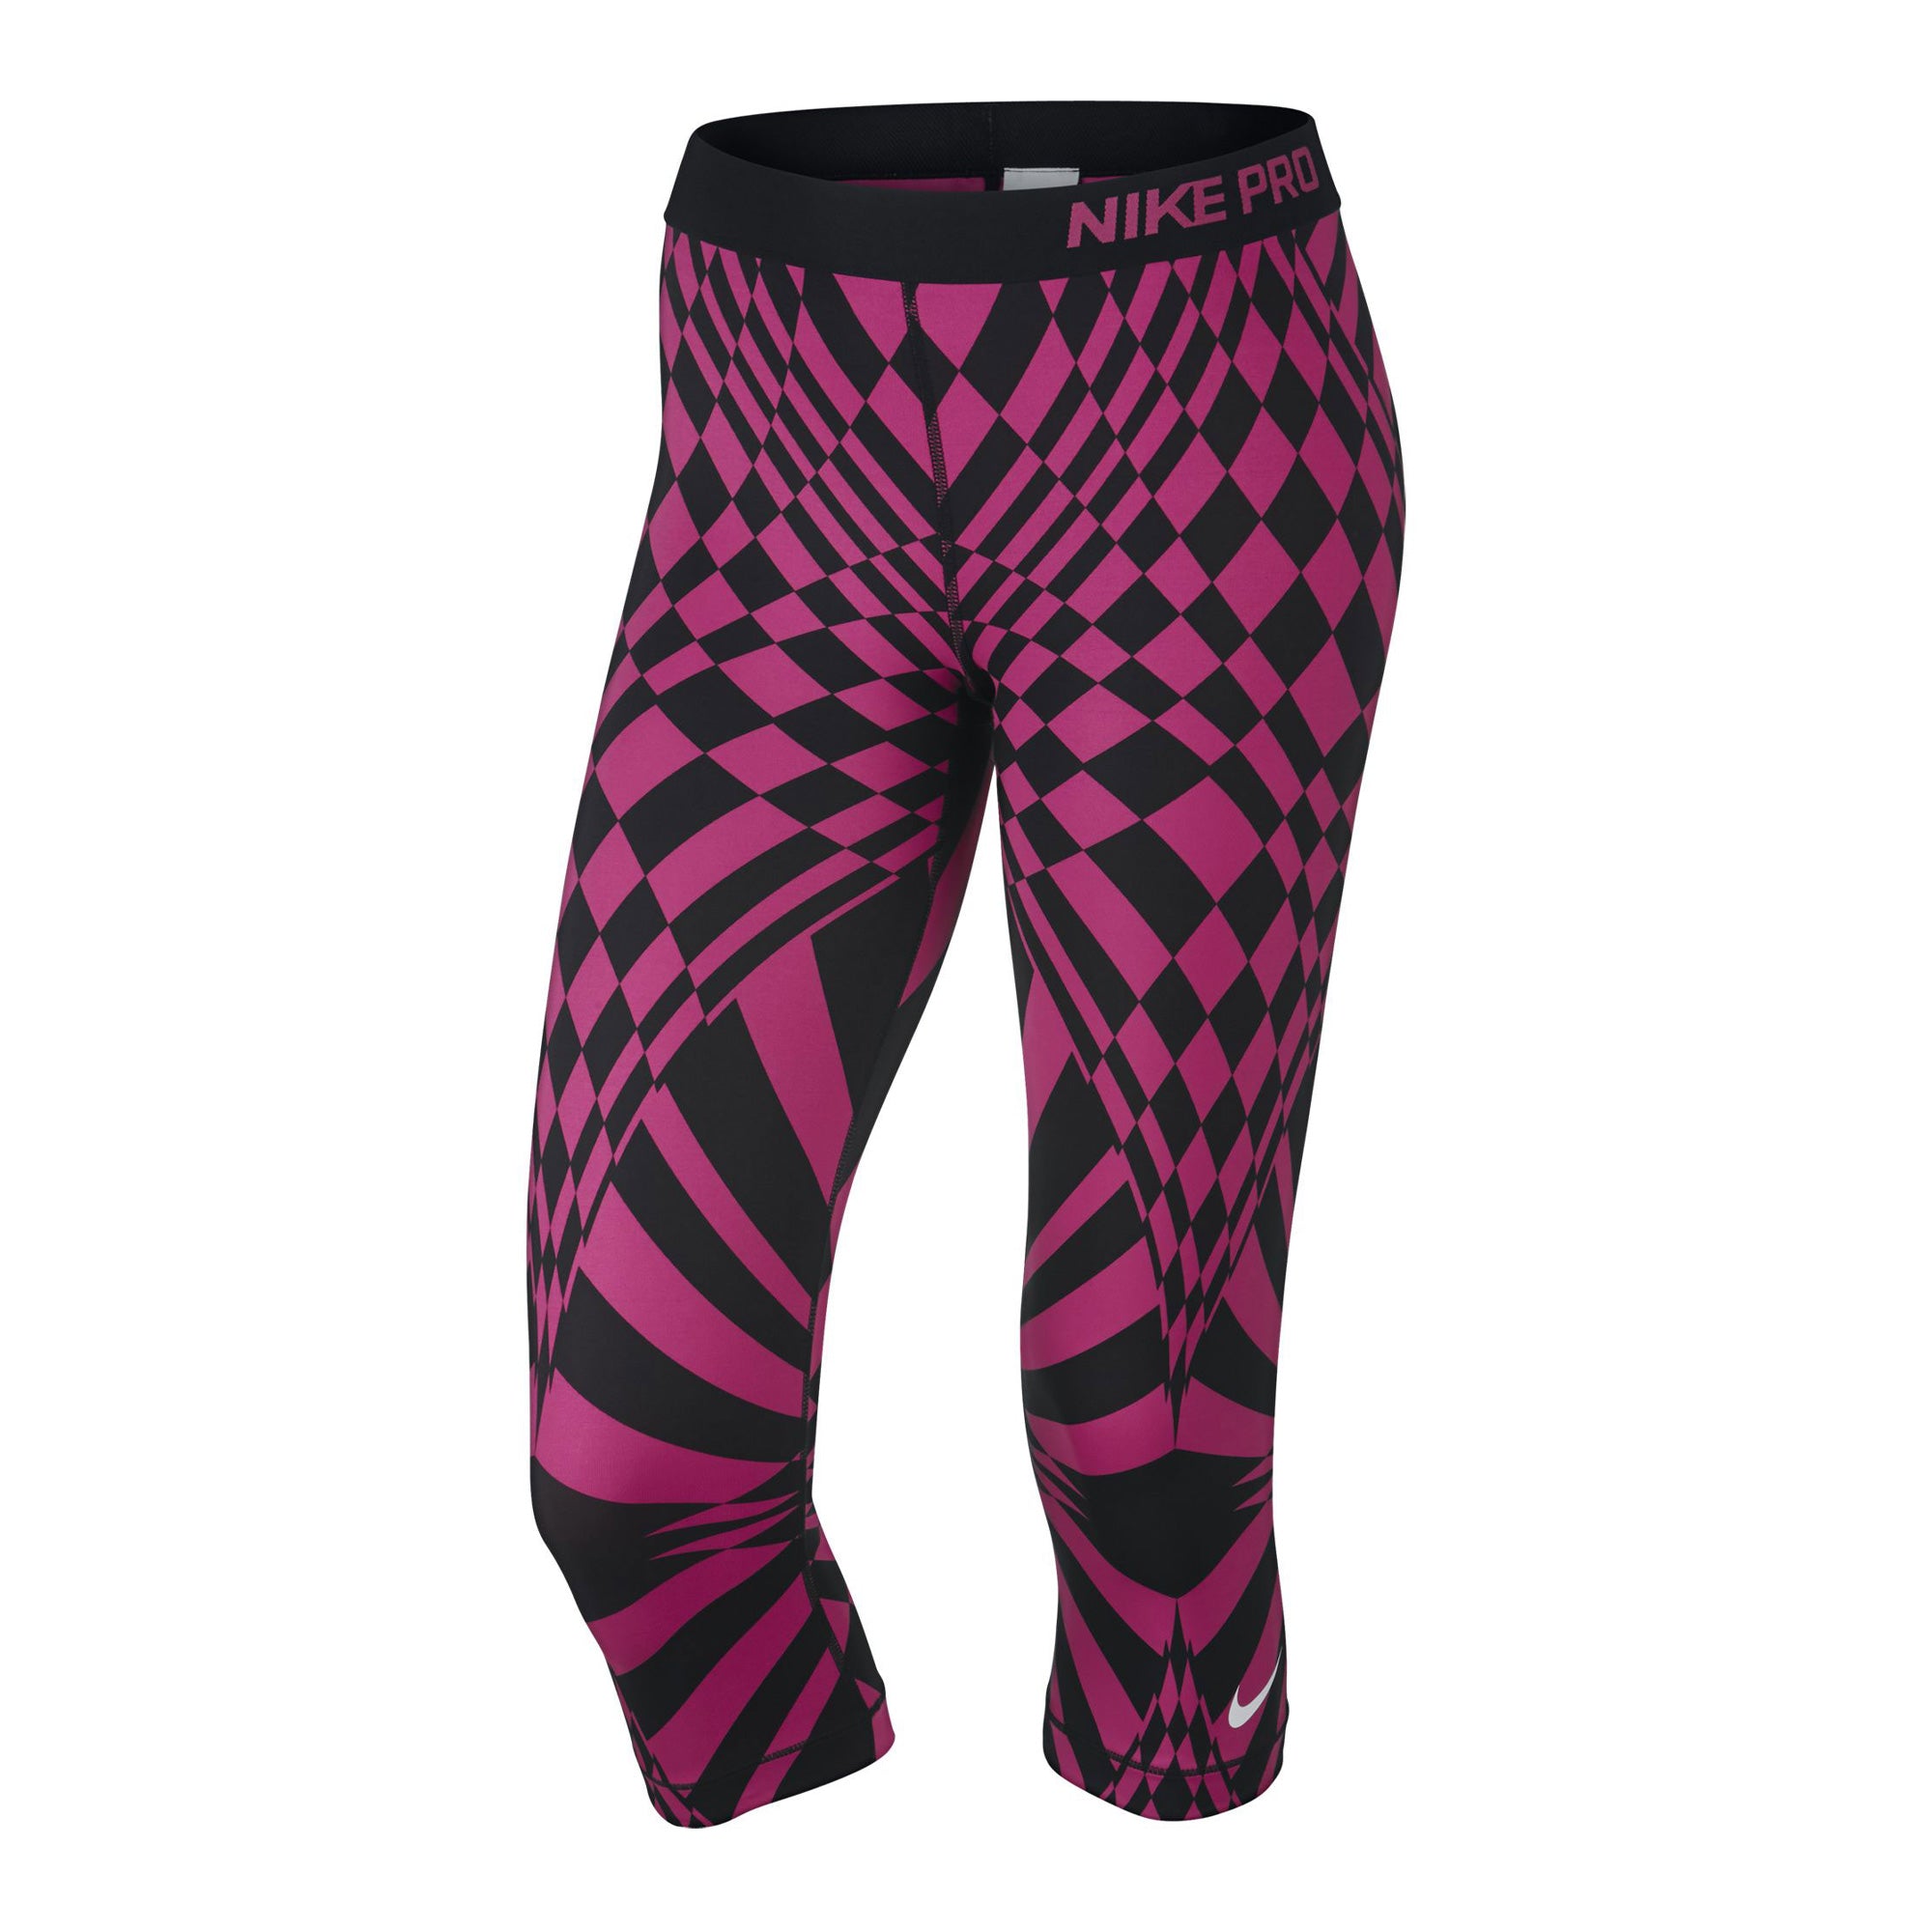 Nike Women's Pro Engineered Training Capris Pink/Black Azteca